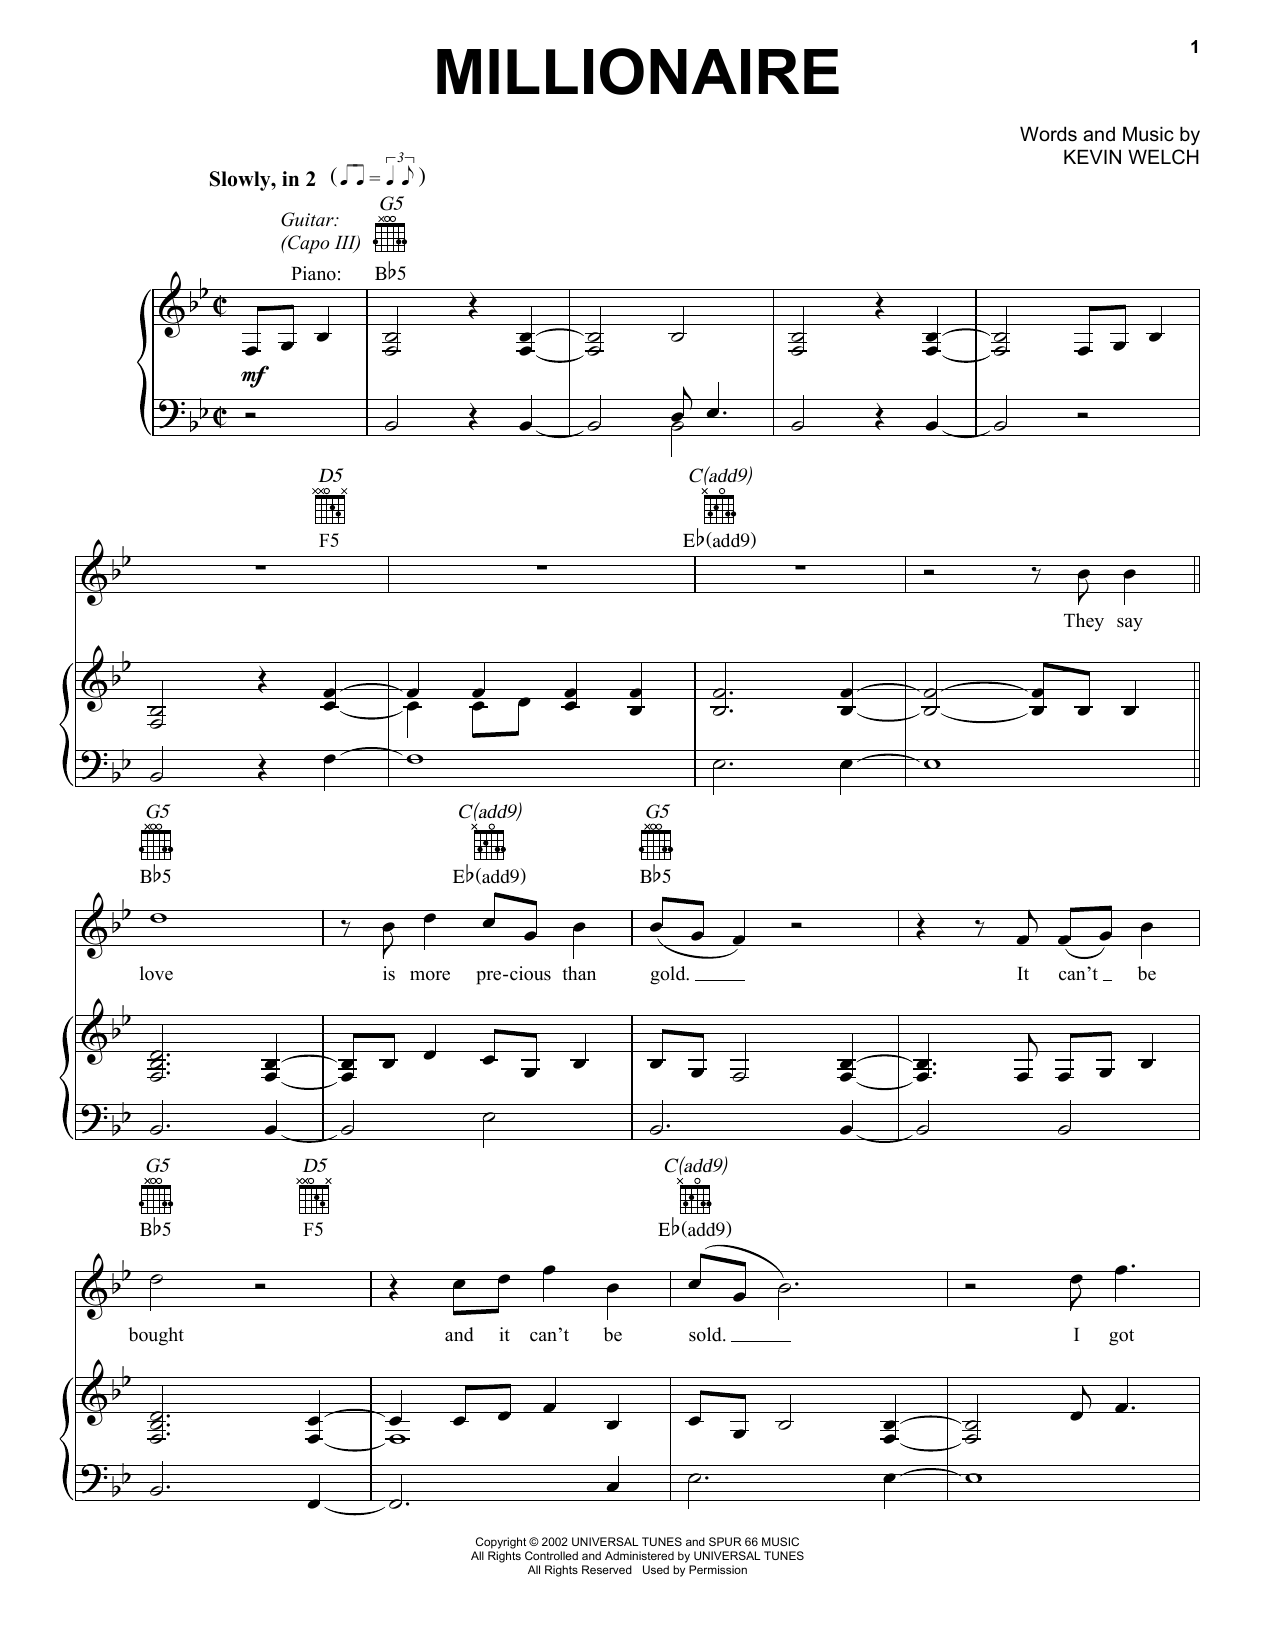 Chris Stapleton Millionaire Sheet Music Notes & Chords for Guitar Tab - Download or Print PDF